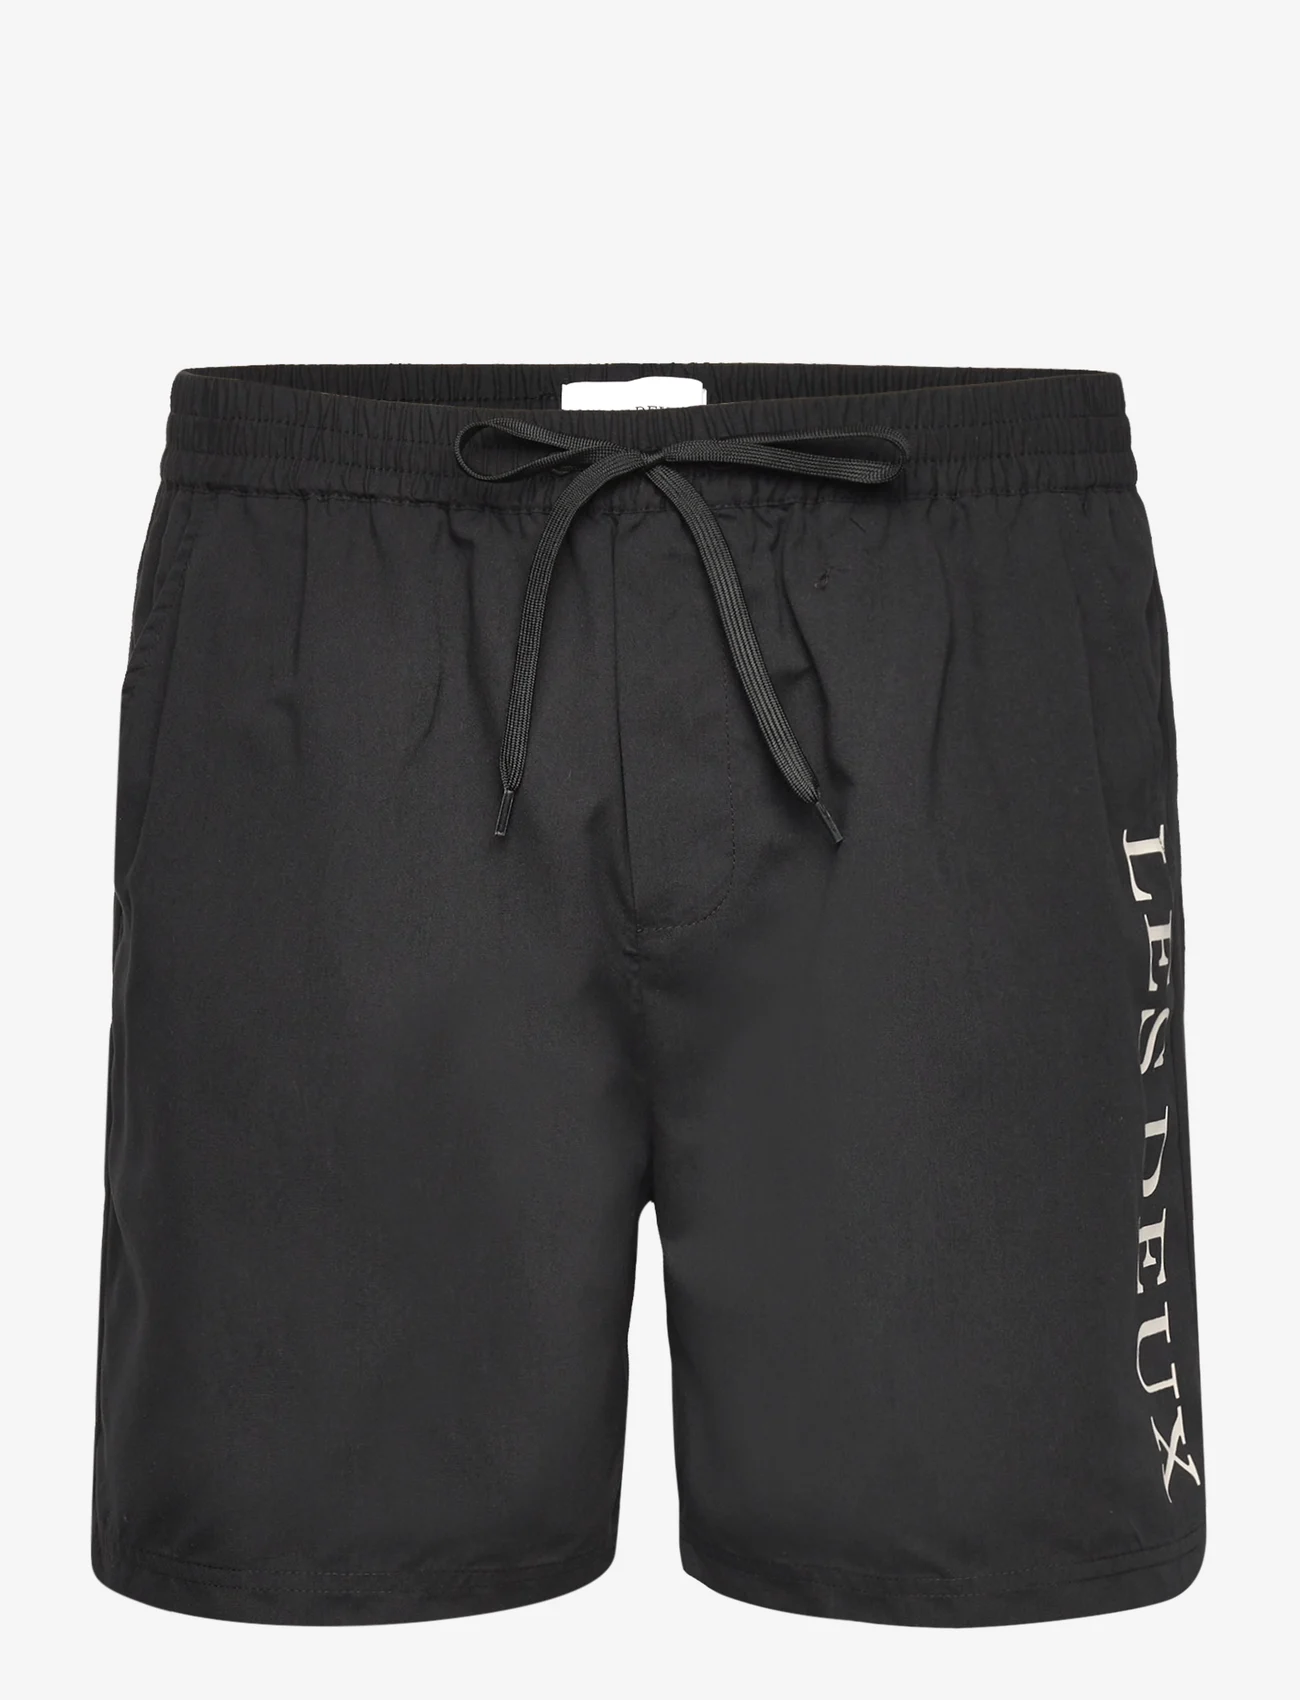 Les Deux - Les Deux Logo Swim Shorts - uimashortsit - black/ivory - 0